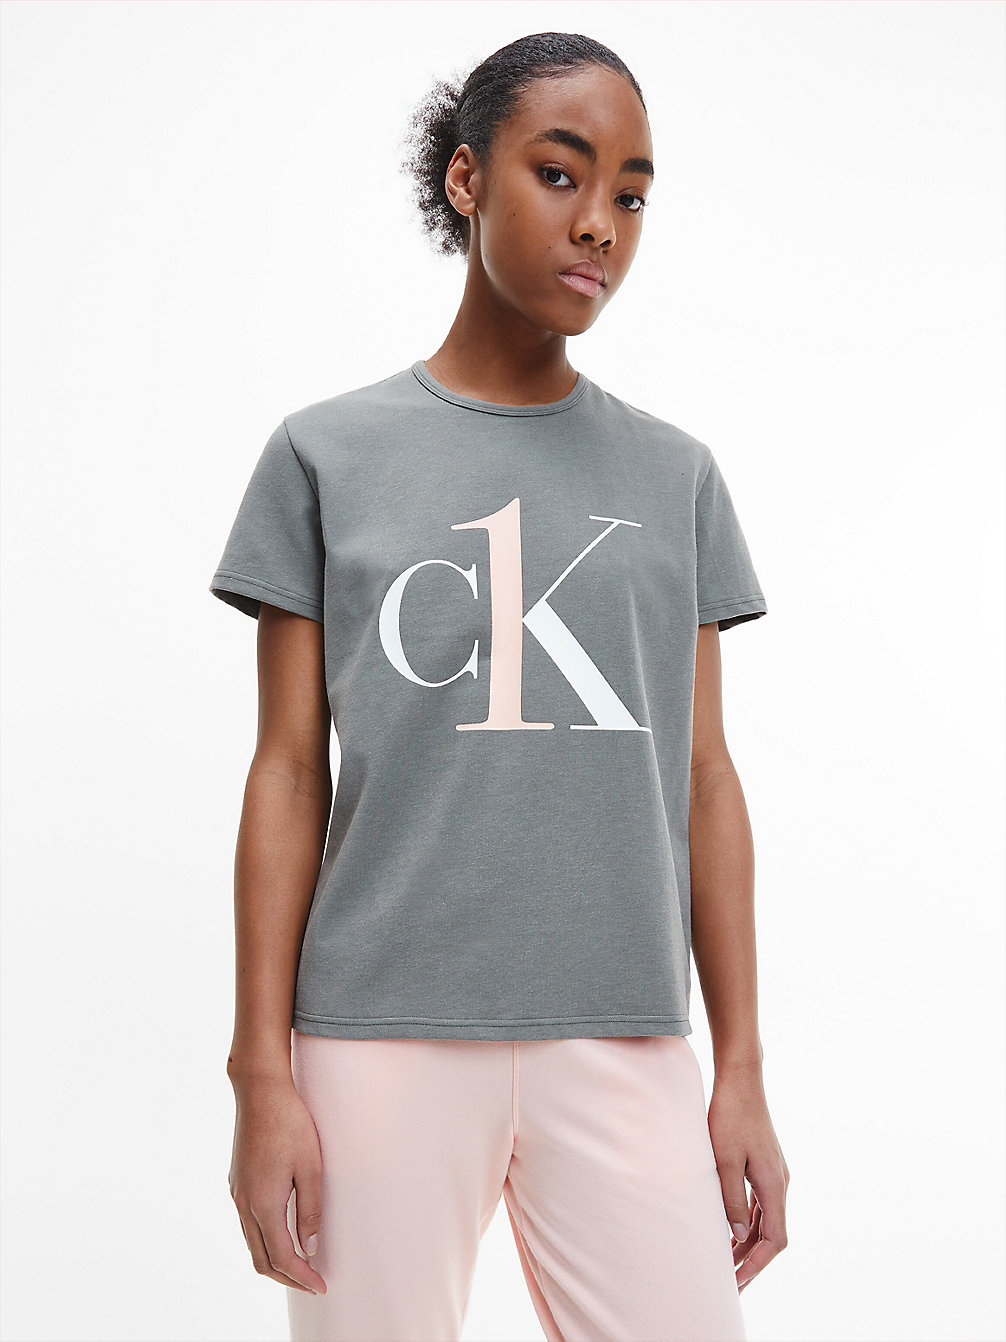 Camiseta De Pijama - CK One > NEW SLATE HEATHER_PEACH MELBA LOGO > undefined mujer > Calvin Klein